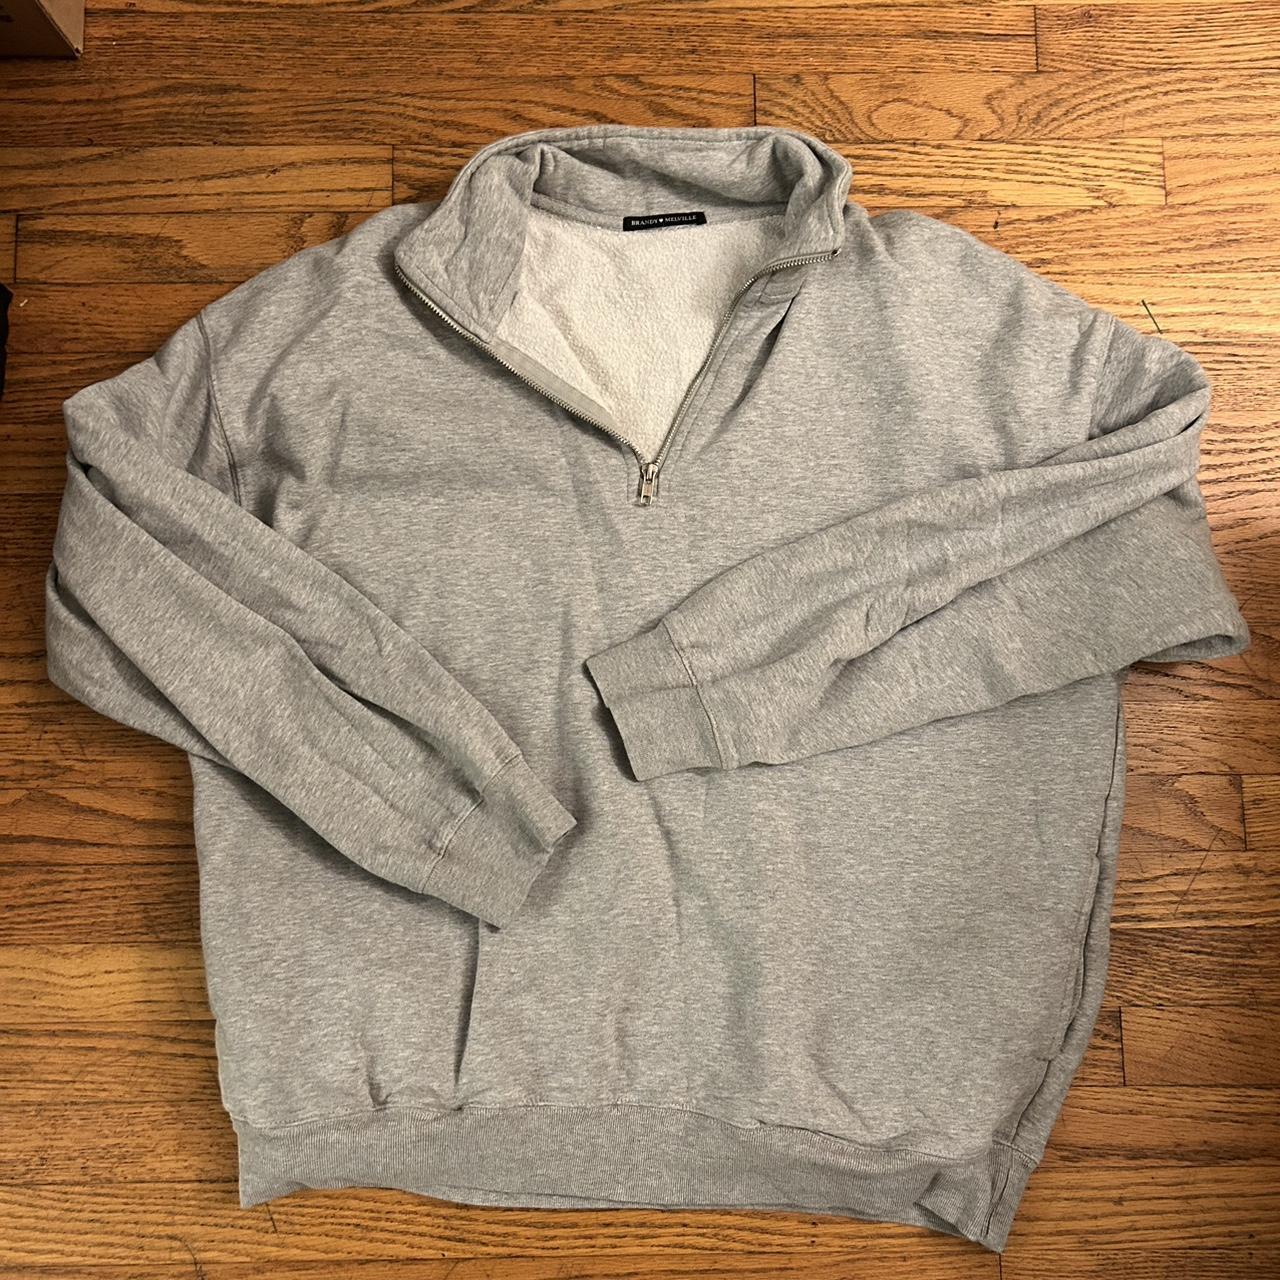 Brandy Melville Women's Grey Sweatshirt